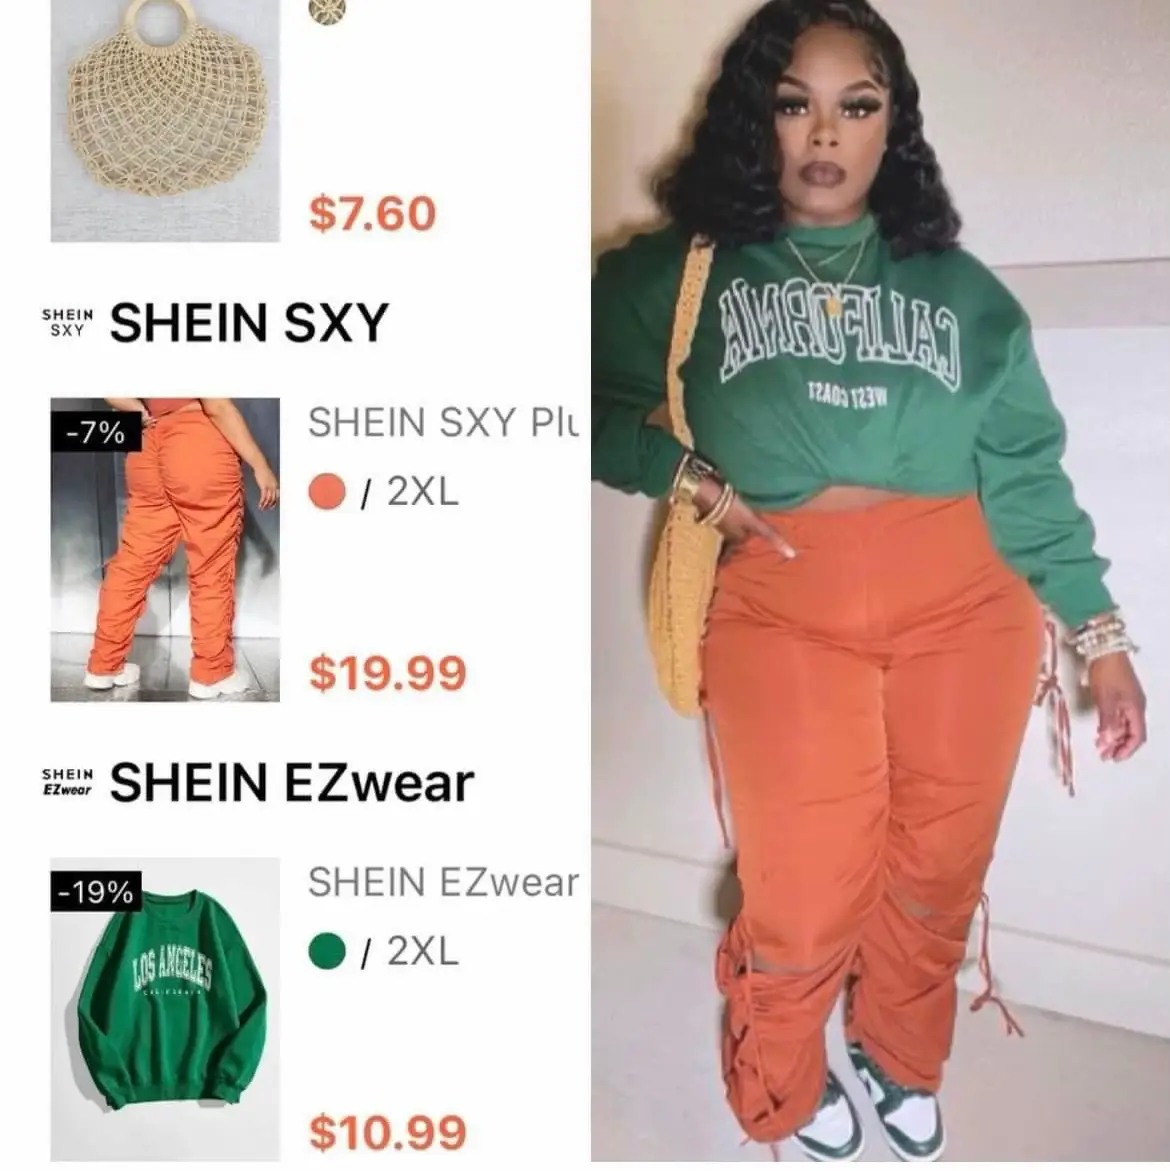 SHEIN Plus Size Fashion, Gallery posted by LemonAid🍋🌿